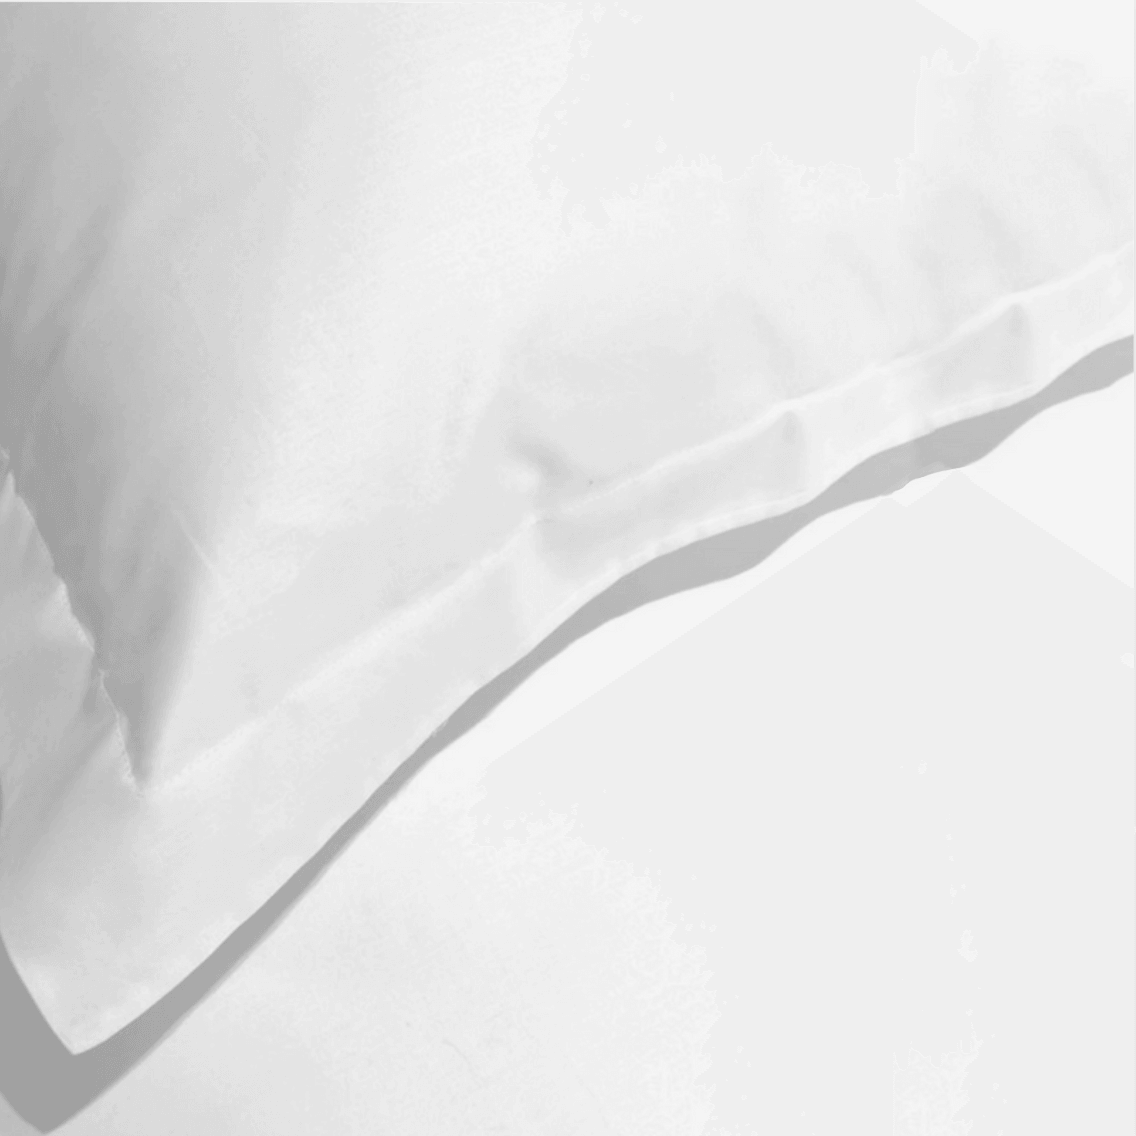 Luxury White Sham with Zipper Closure | Beddley Standard 2-Pack